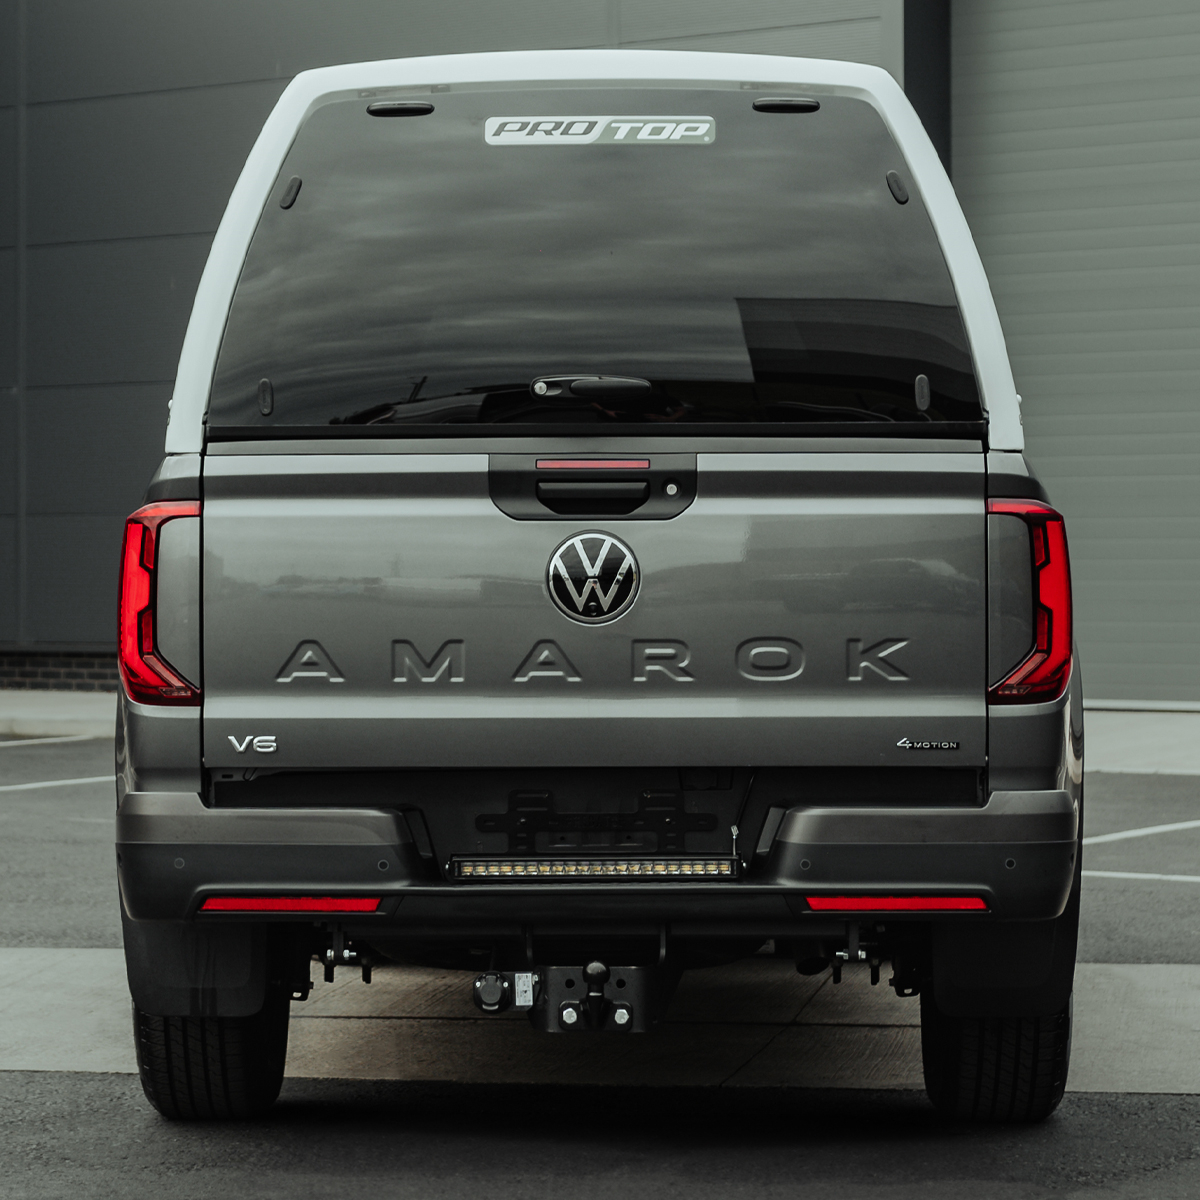 VW Amarok Truckman style commercial hardtop canopy for fleet use